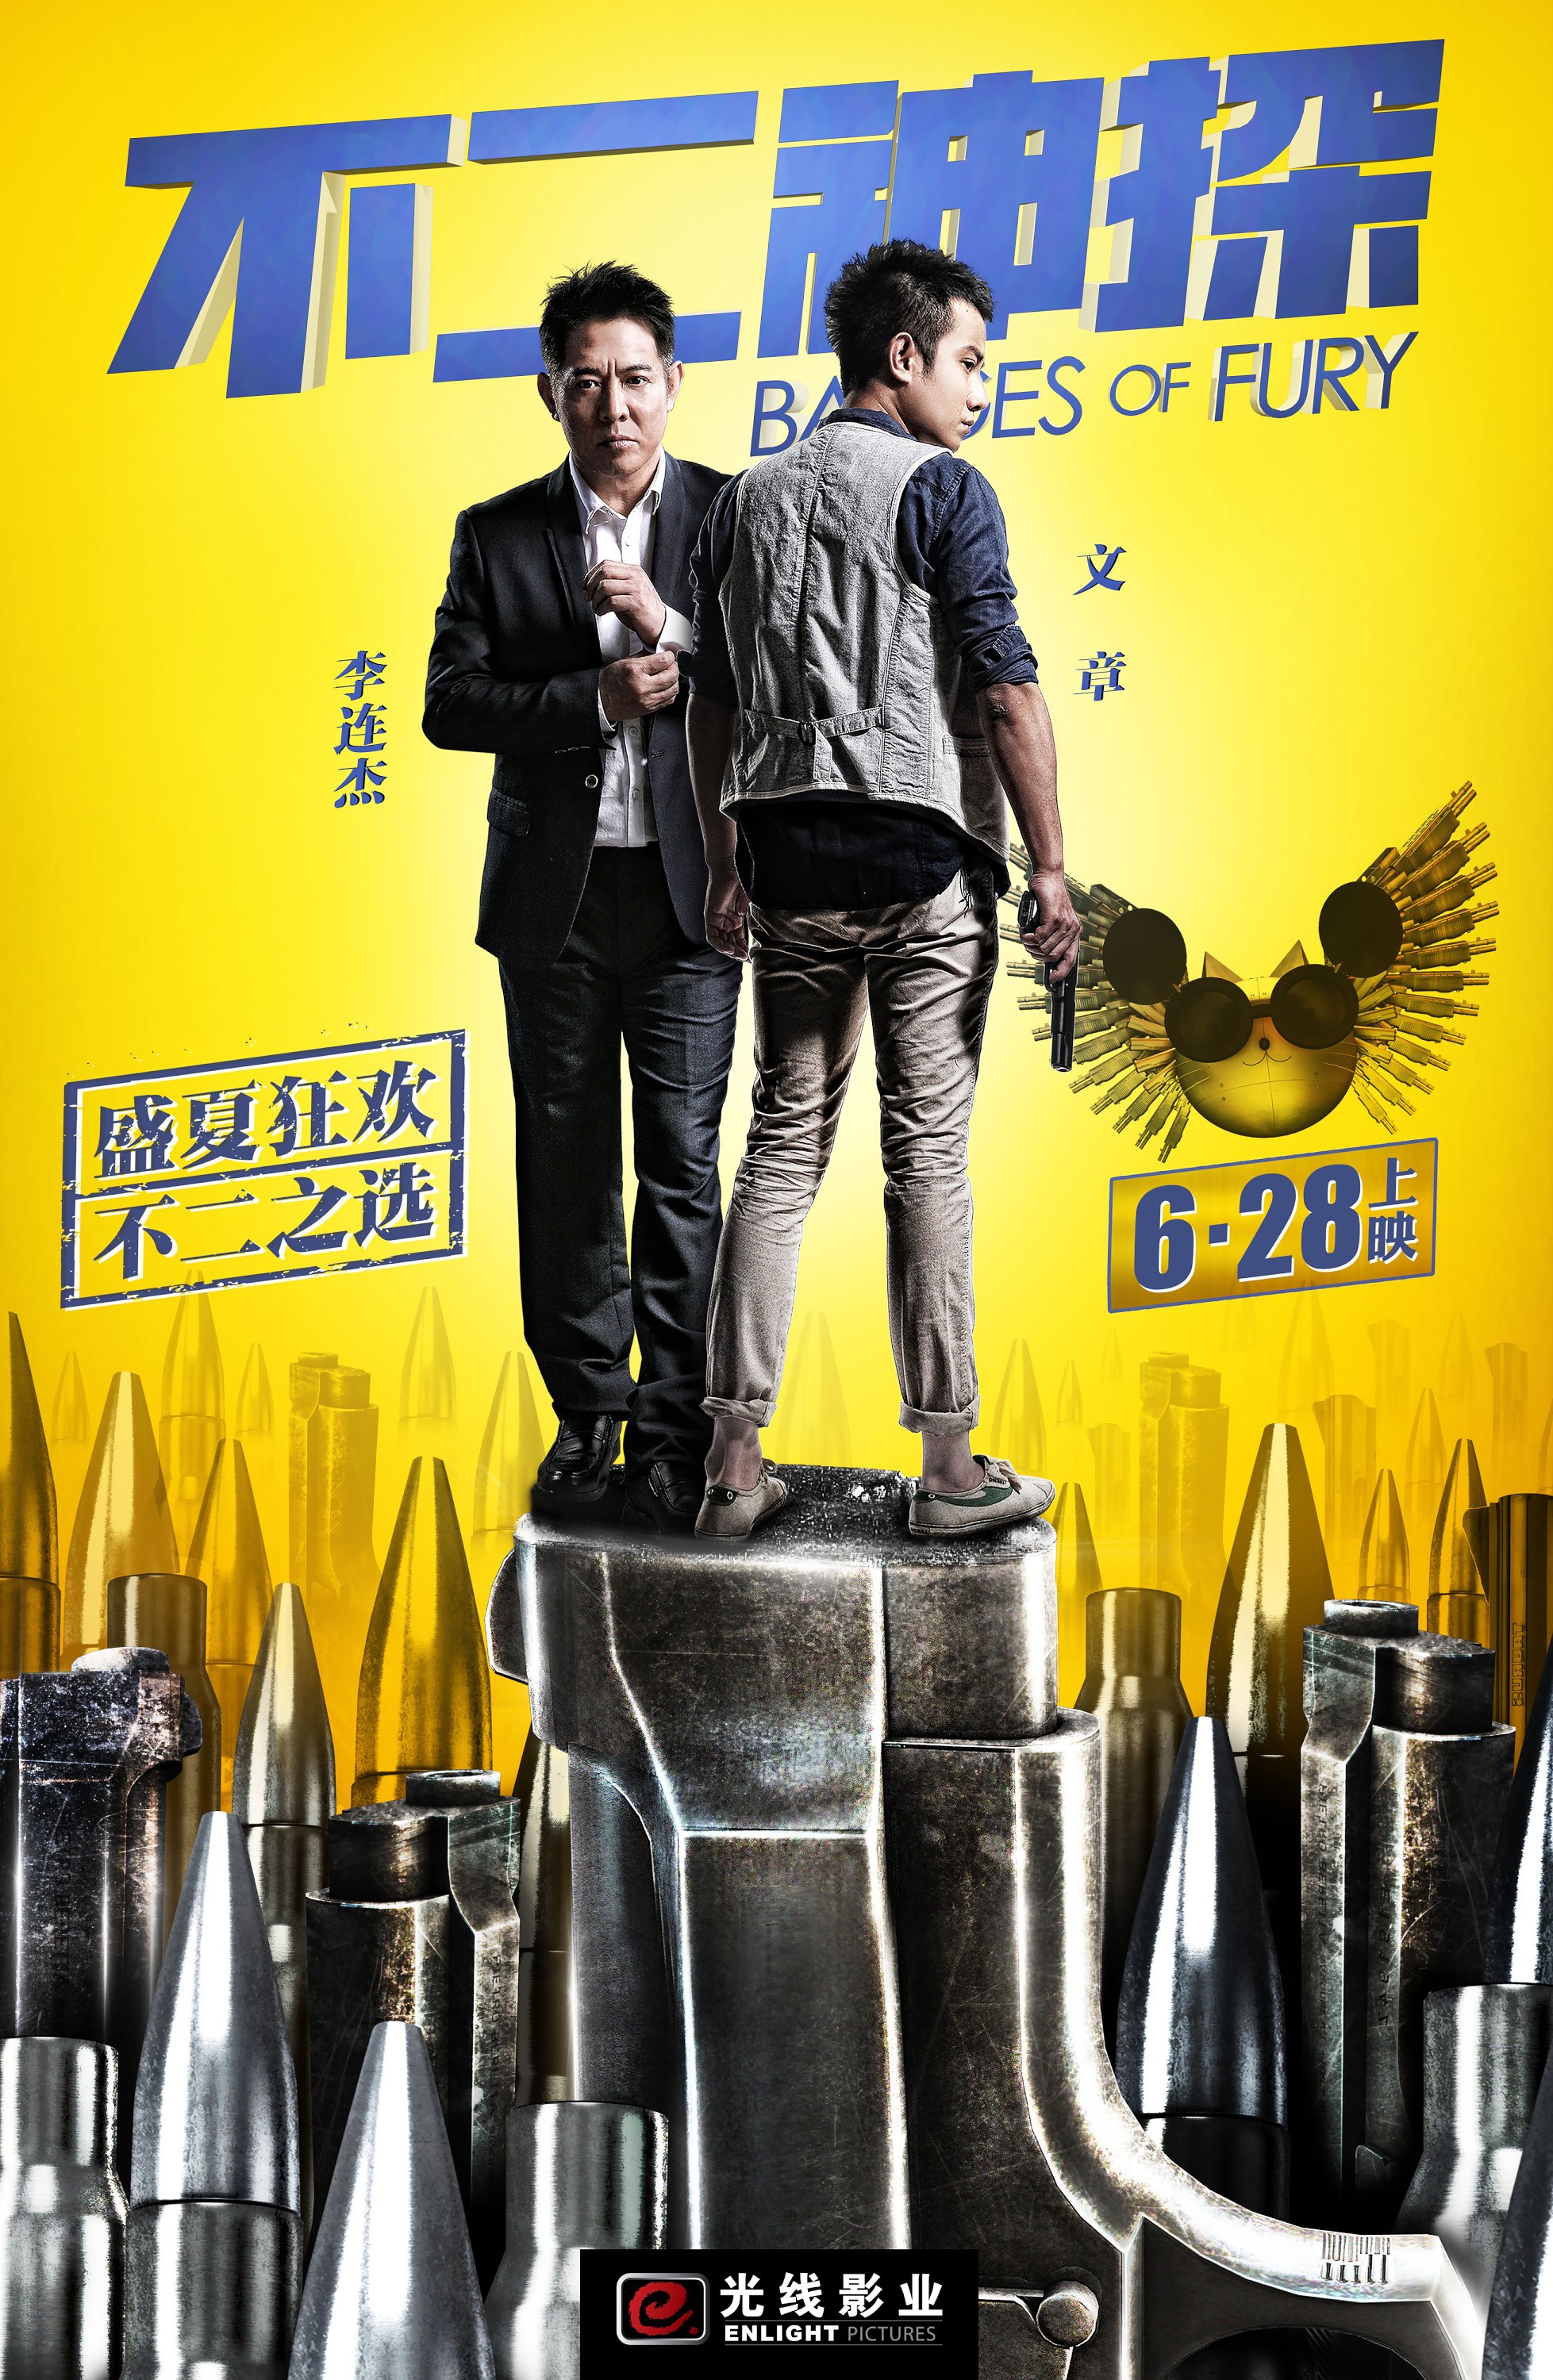 Mega Sized Movie Poster Image for Bu er shen tan (#5 of 5)